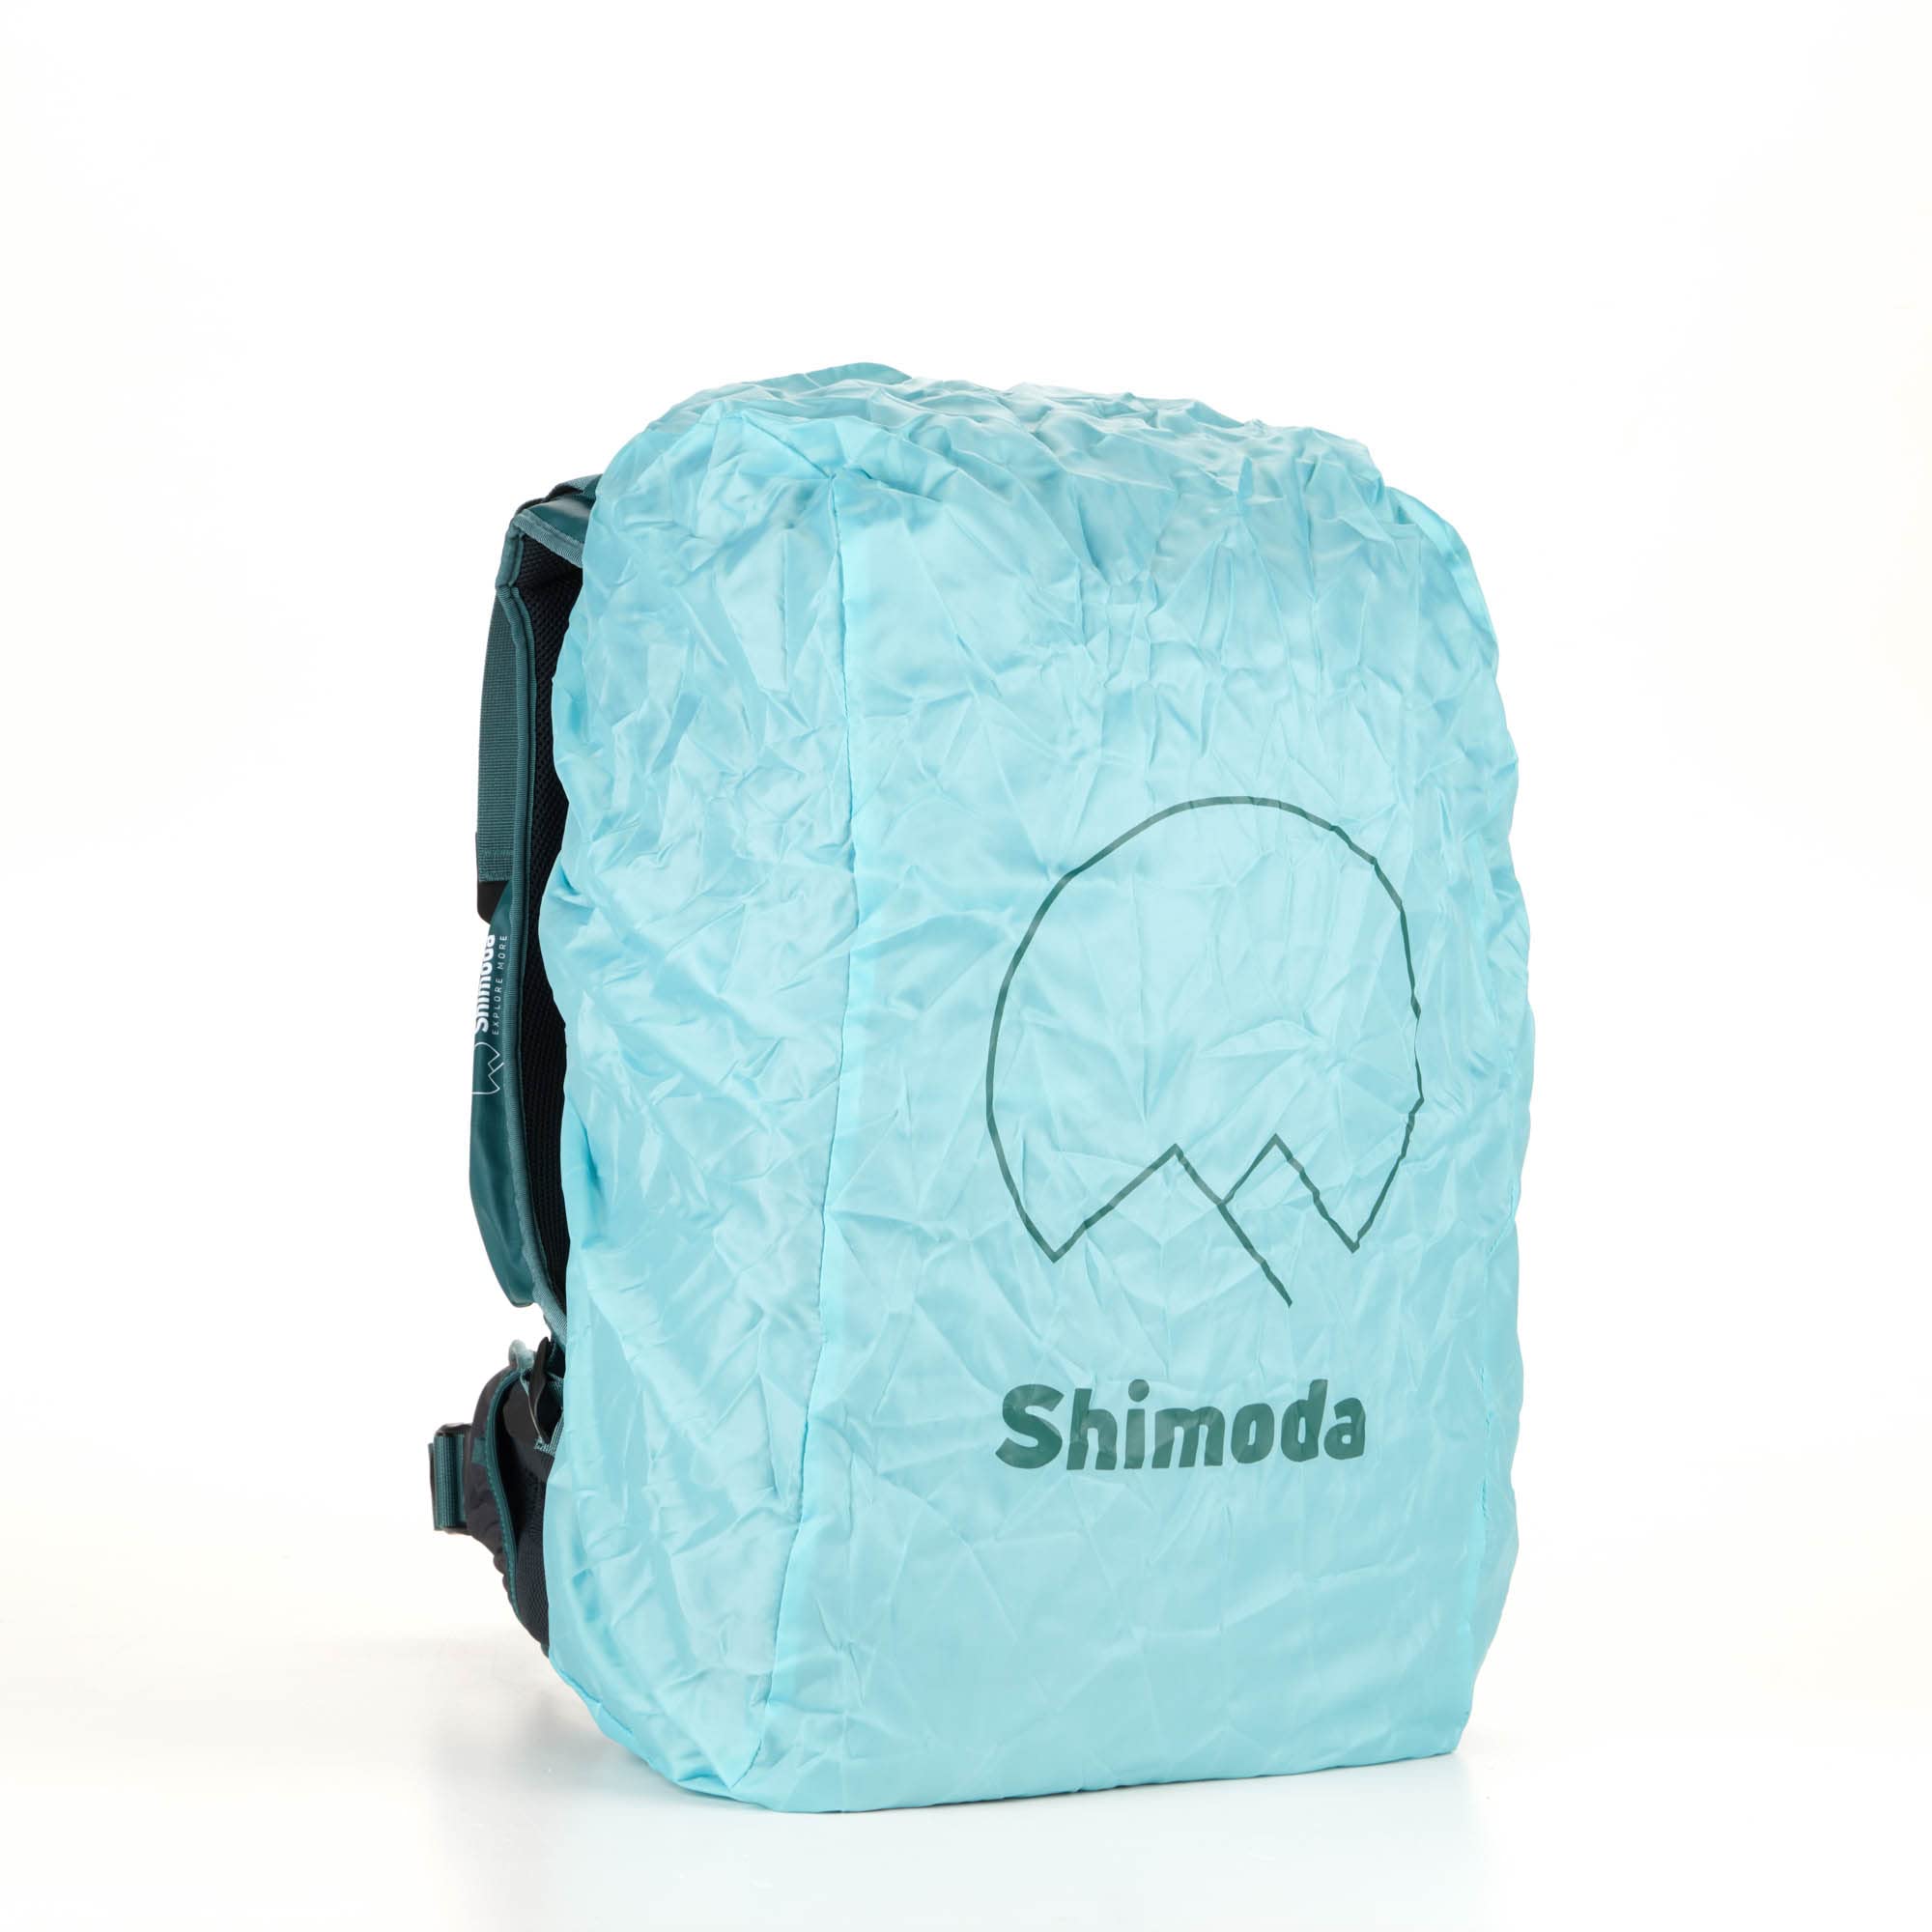 Shimoda Explore v2 30 Women's Starter Kit (w/Medium Mirrorless Core Unit) - Teal